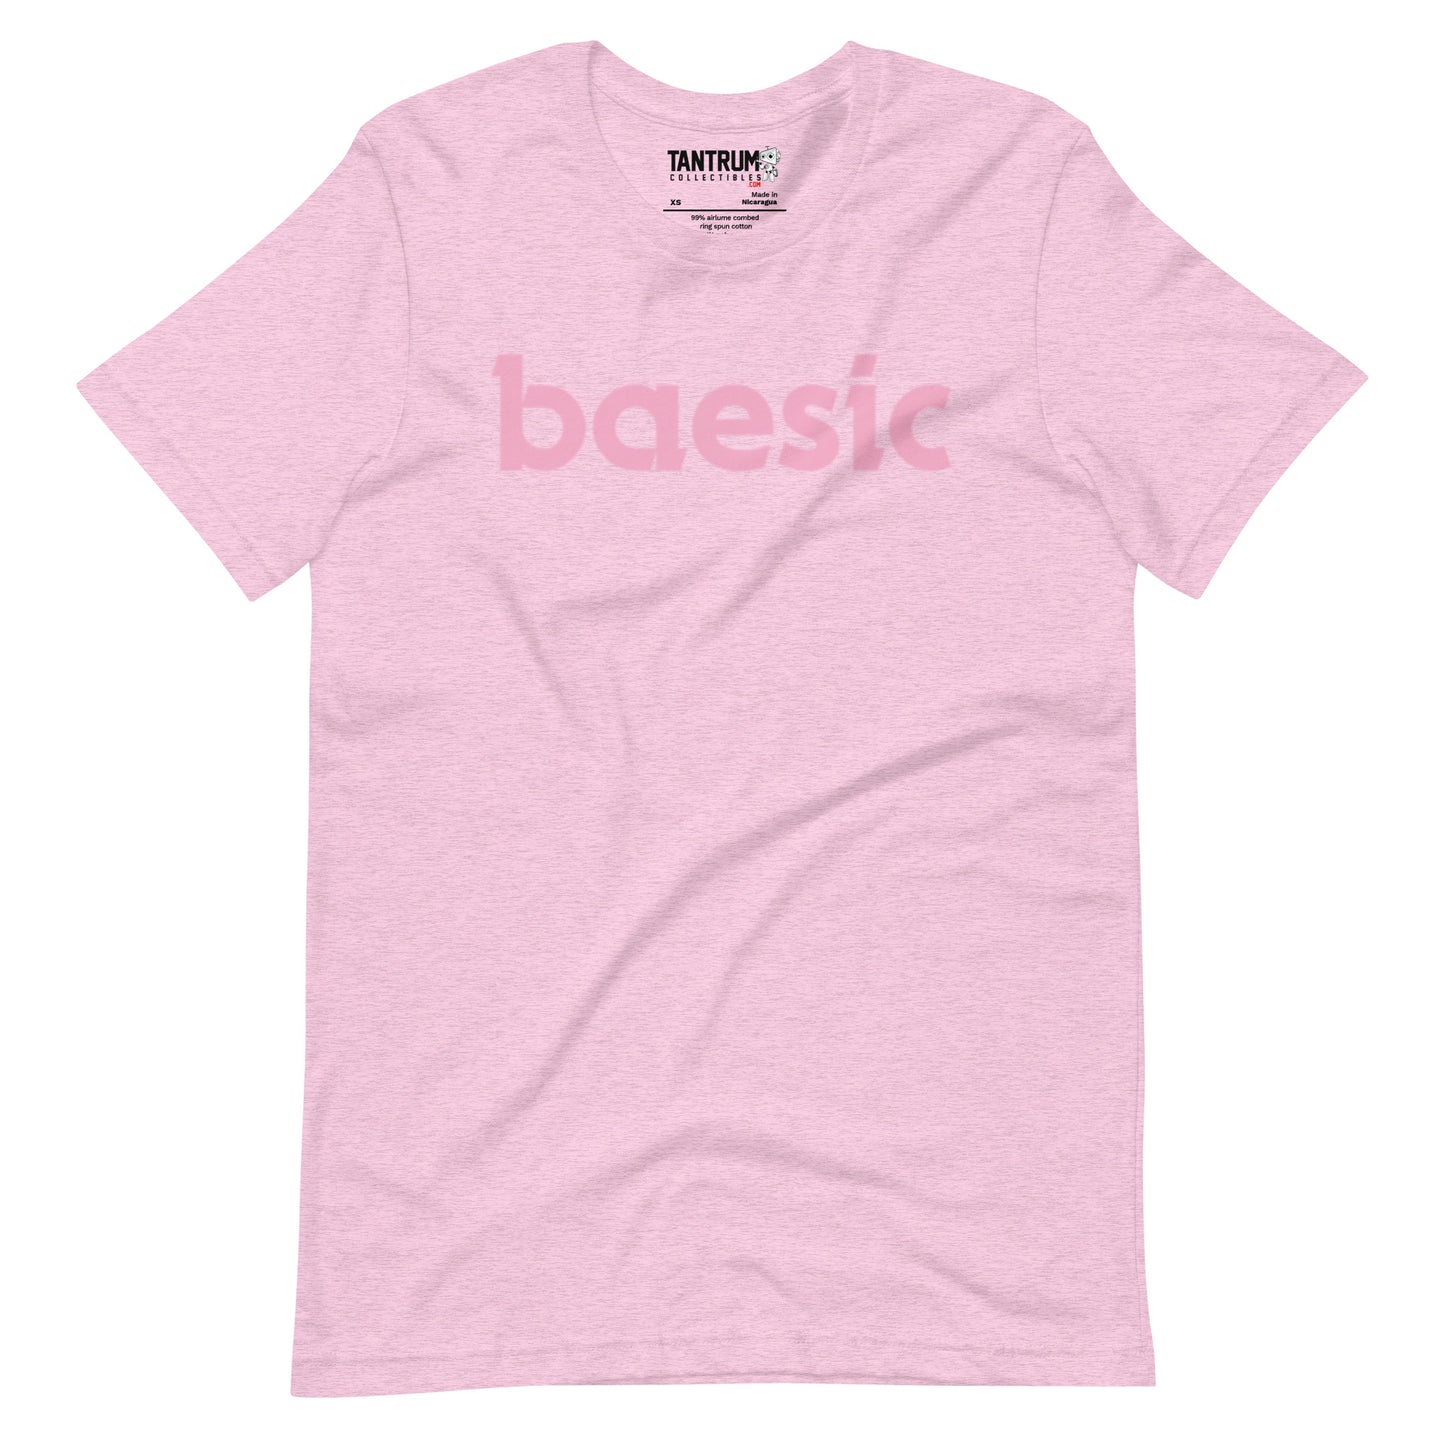 Baeginning - Unisex T-Shirt - Baesic